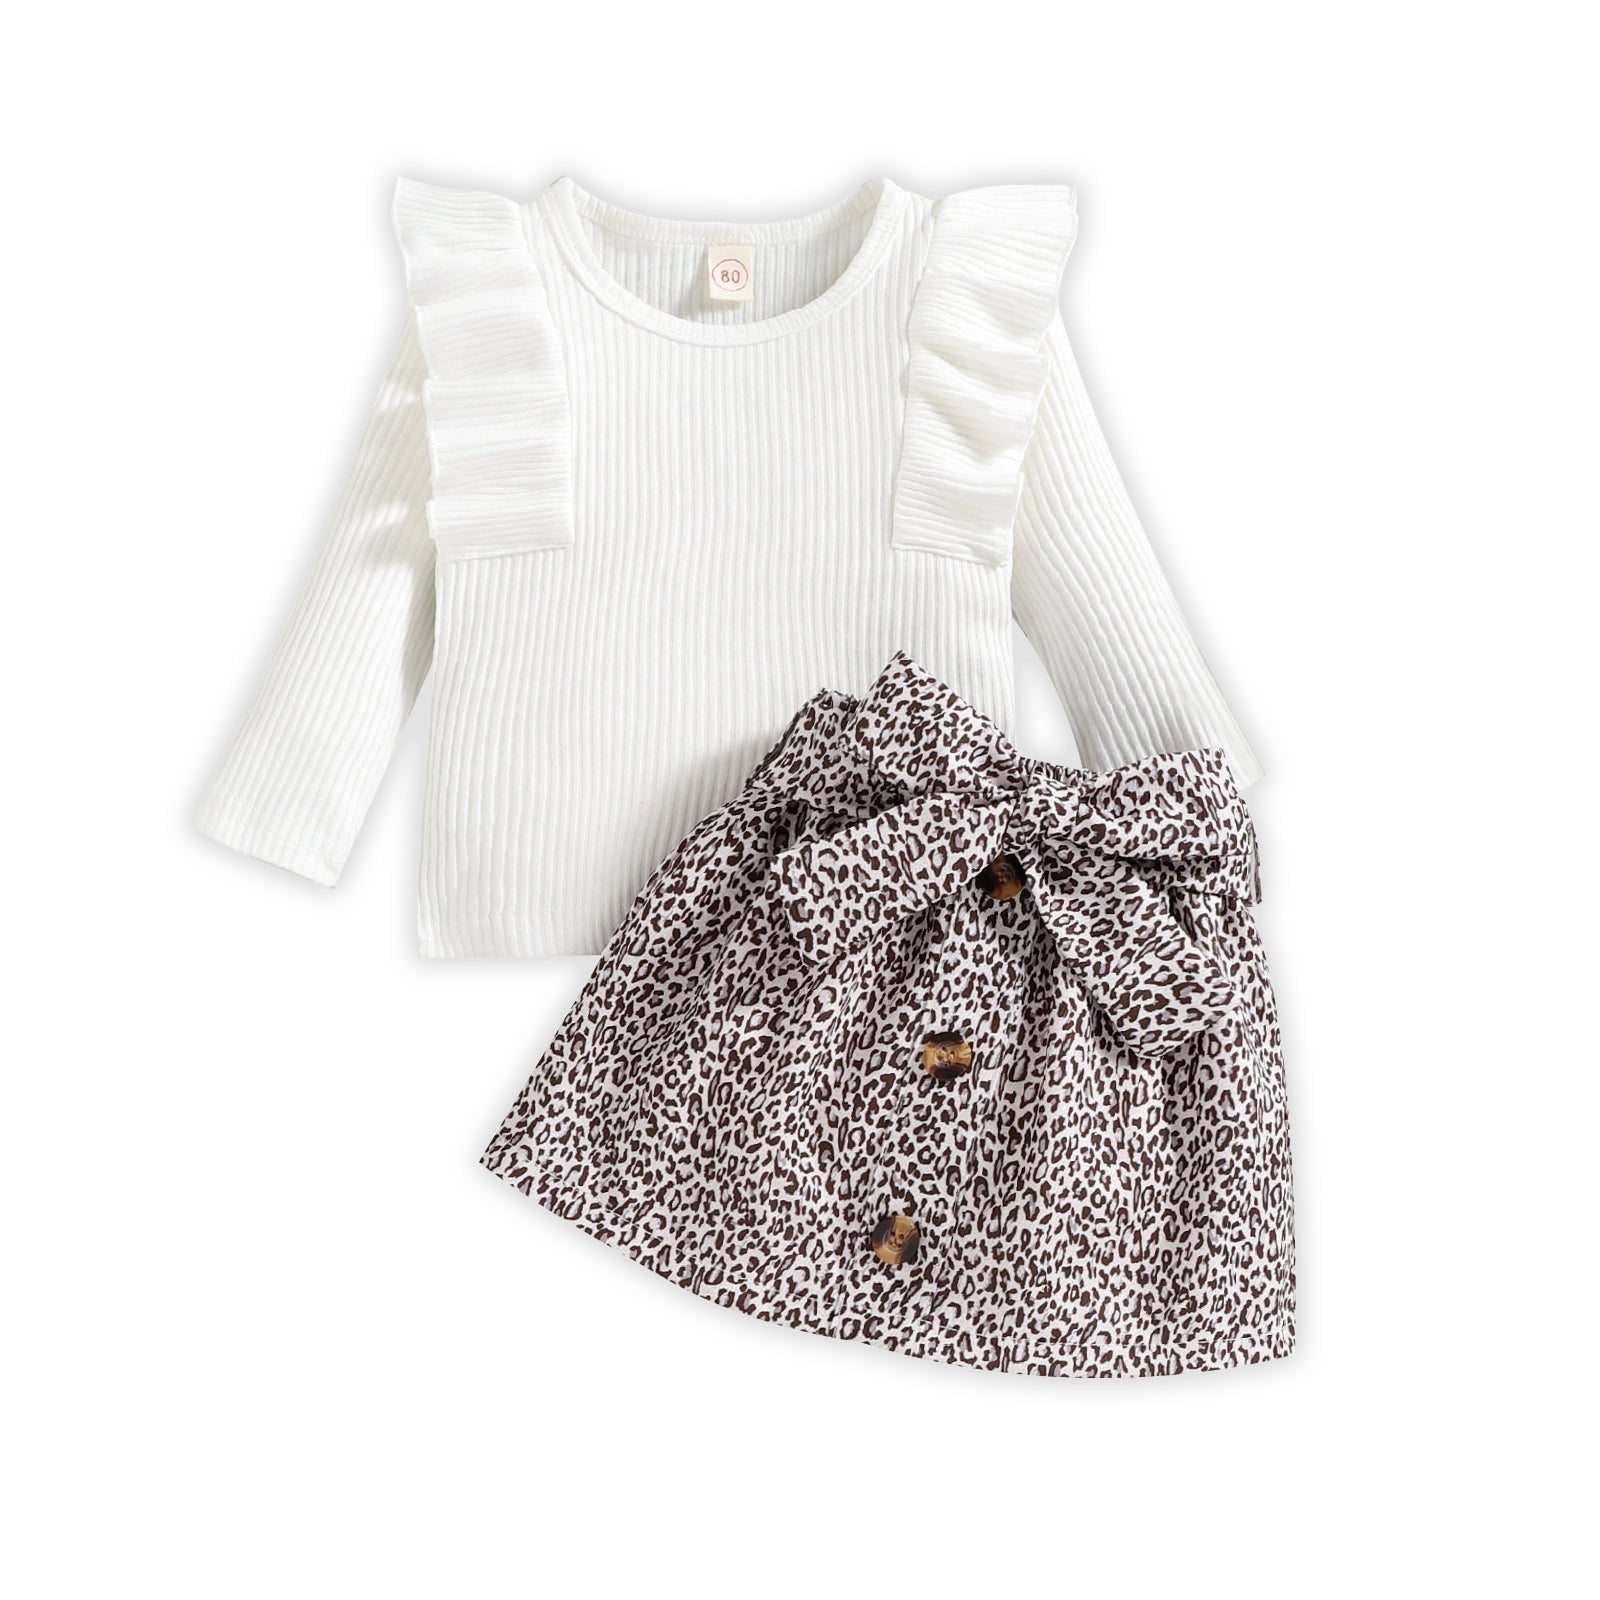 Baby Tops + Leopard Skirt.